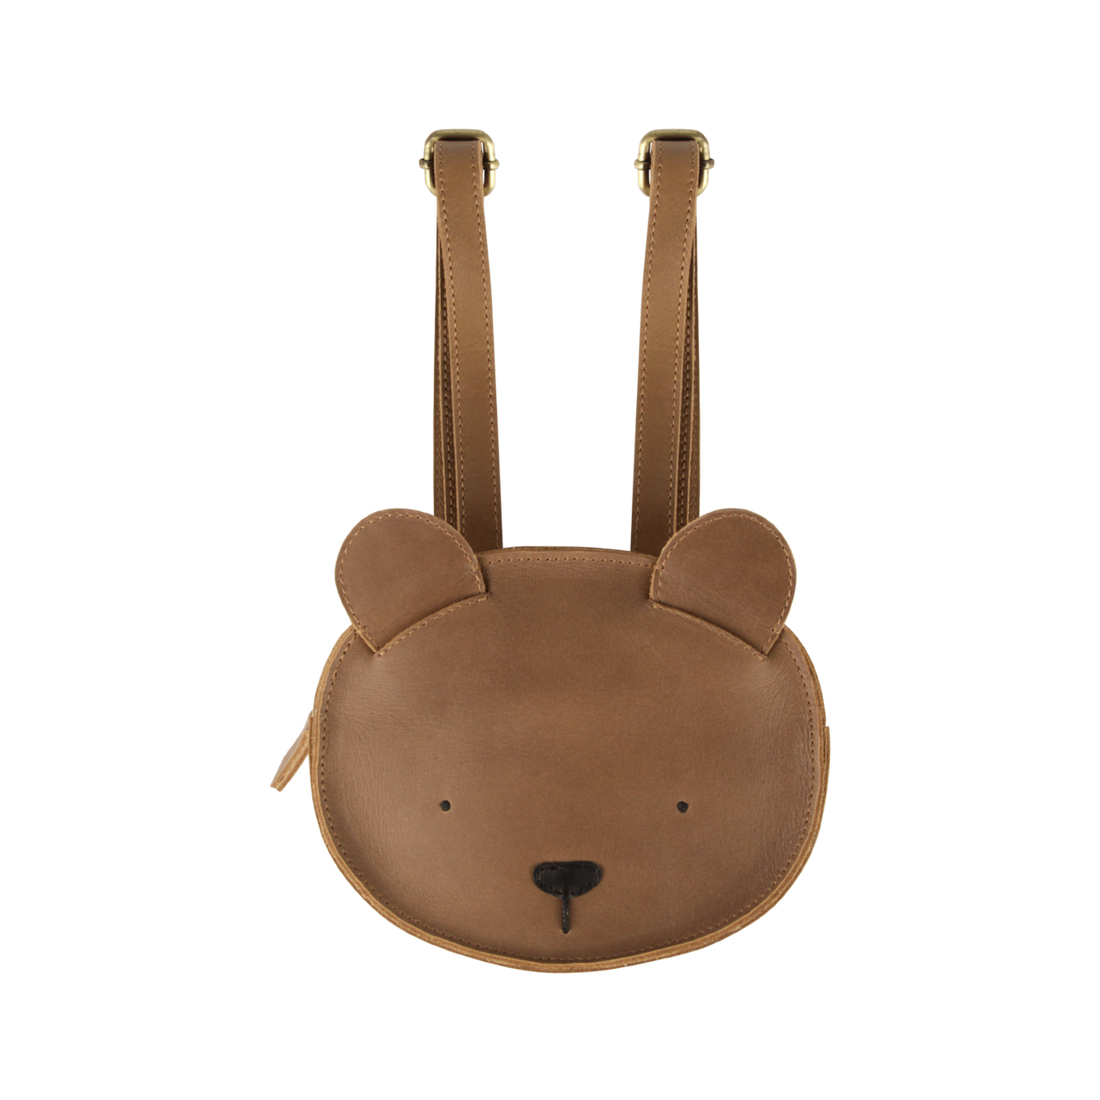 Kapi Classic Backpack | Bear | Cognac Classic Leather